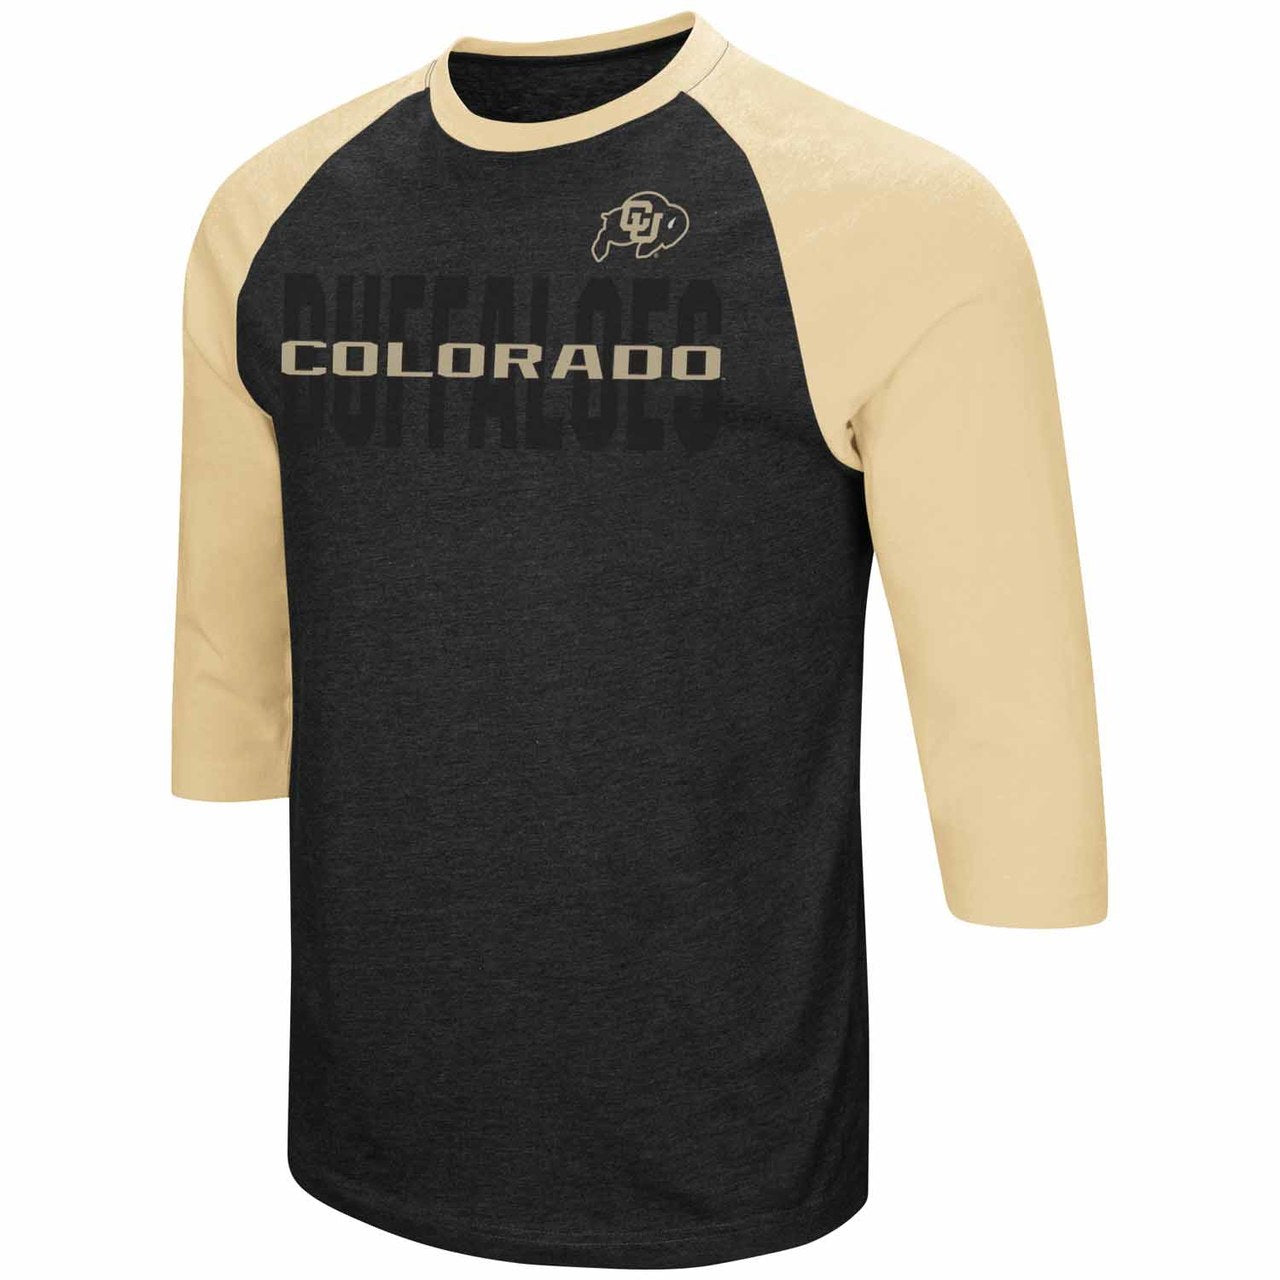 Colorado Buffalos Colorado Buffalos Colorado Buffaloes Adult NCAA Steal Home 3/4 Sleeve Shirt